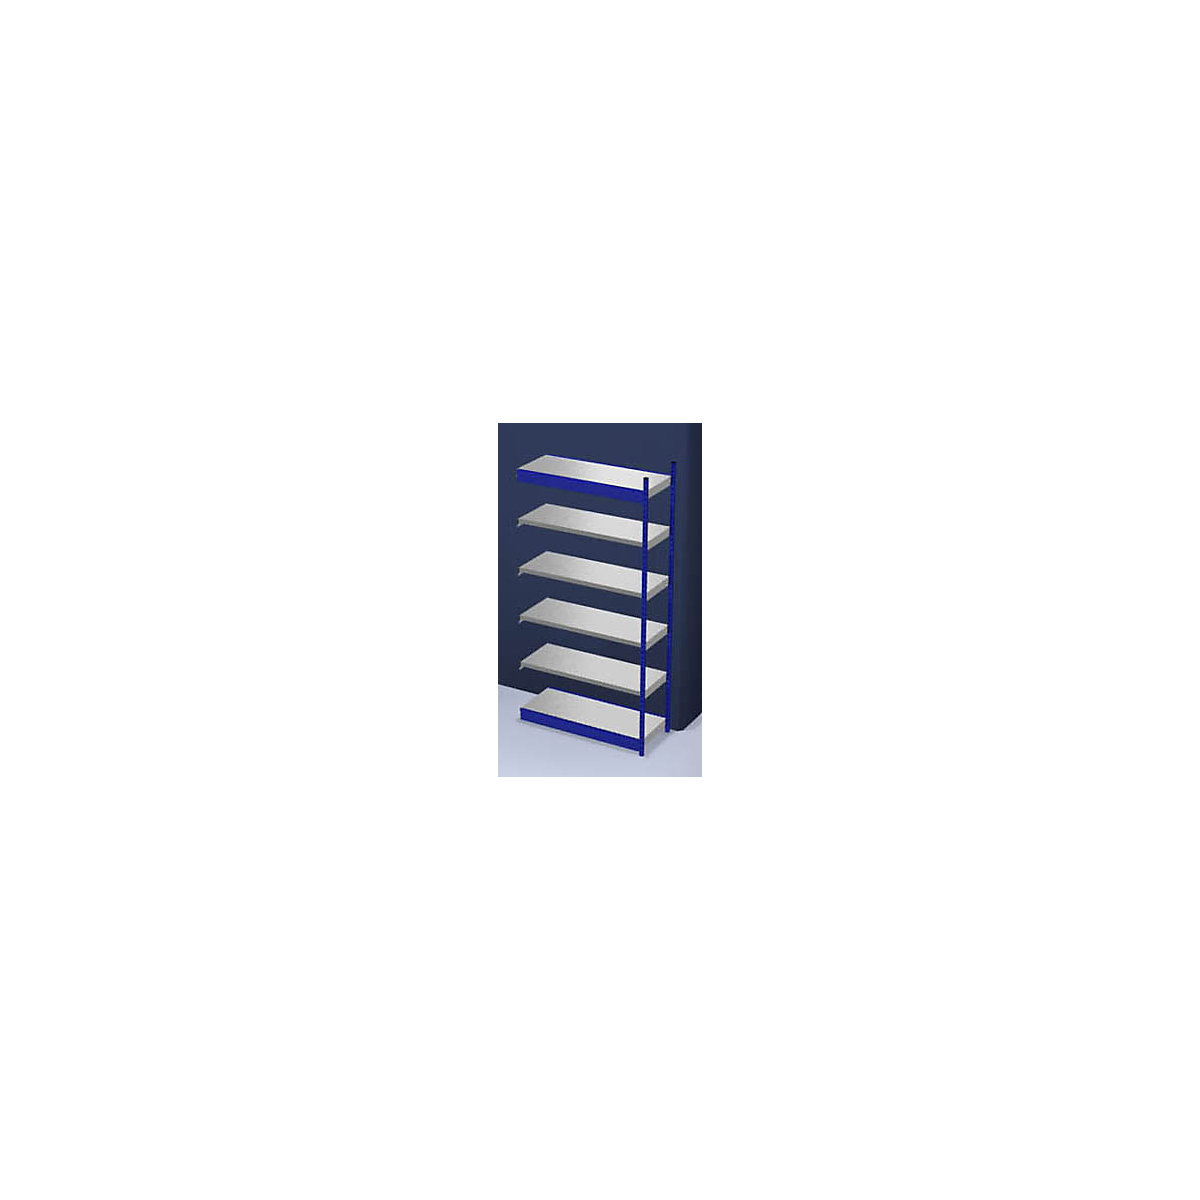 Stable boltless shelf unit, single sided – hofe, shelf unit height 2500 mm, blue / zinc-plated, shelf width 1325 mm, extension shelf unit, width x depth 1325 x 500 mm-6